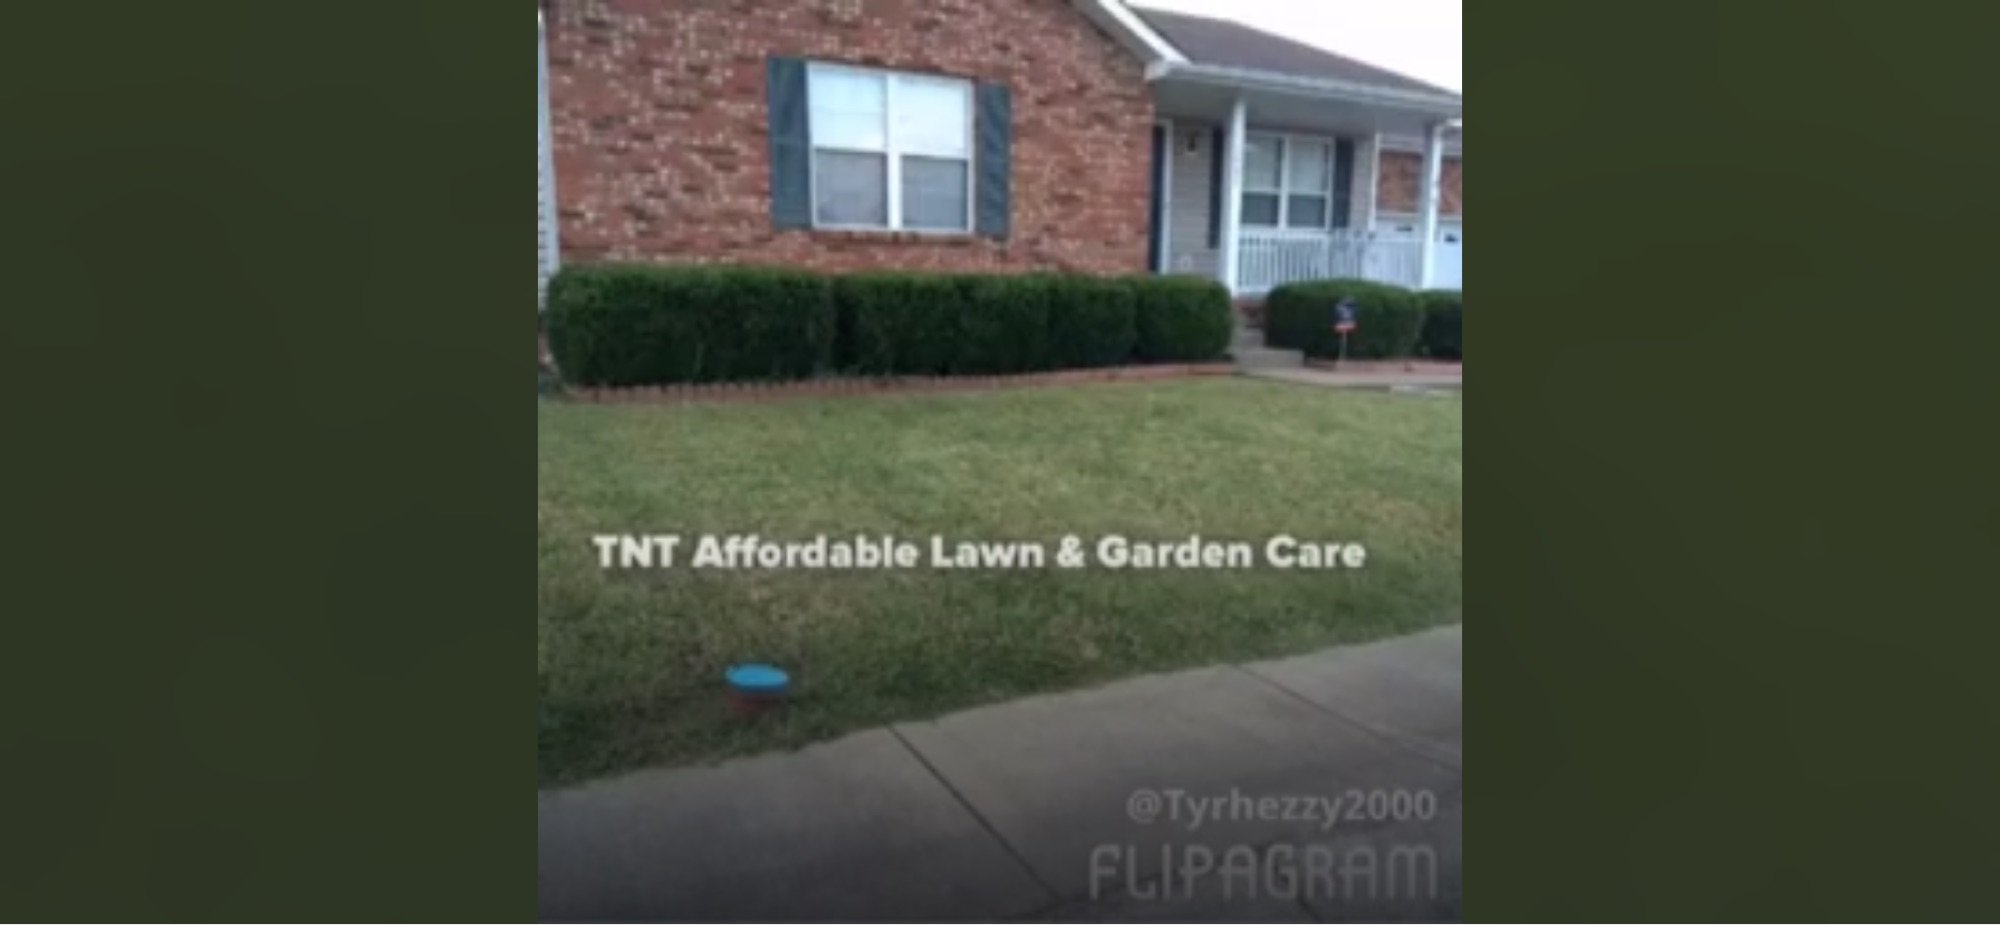 TNT Affordable Lawn & Garden Care Logo